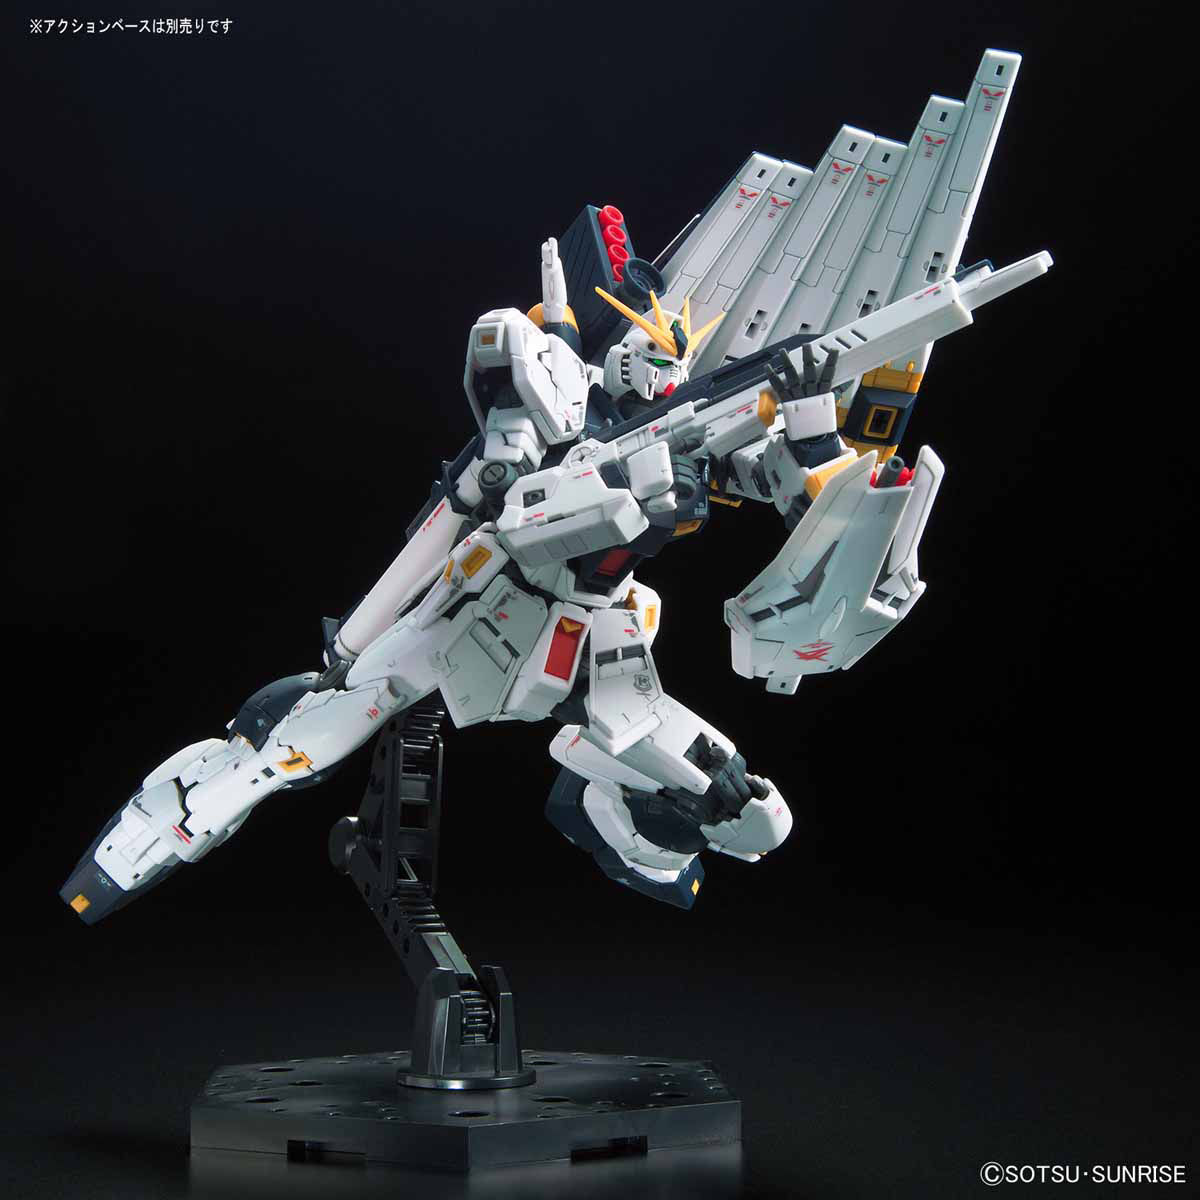 Gundam Real Grade Excitement Embodied 1/144 Scale Model Kit: #35 Wing Gundam  